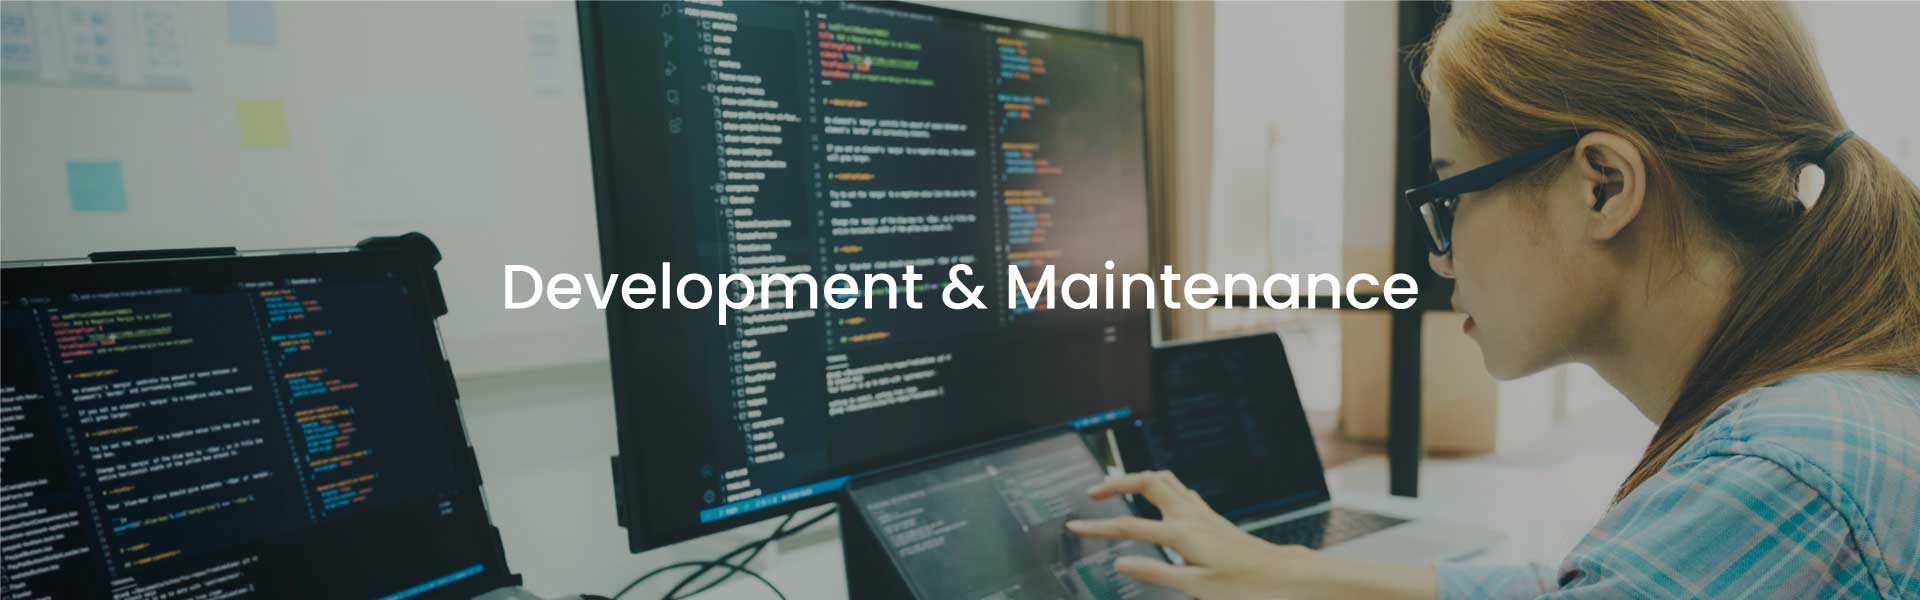 Development & Maintenance